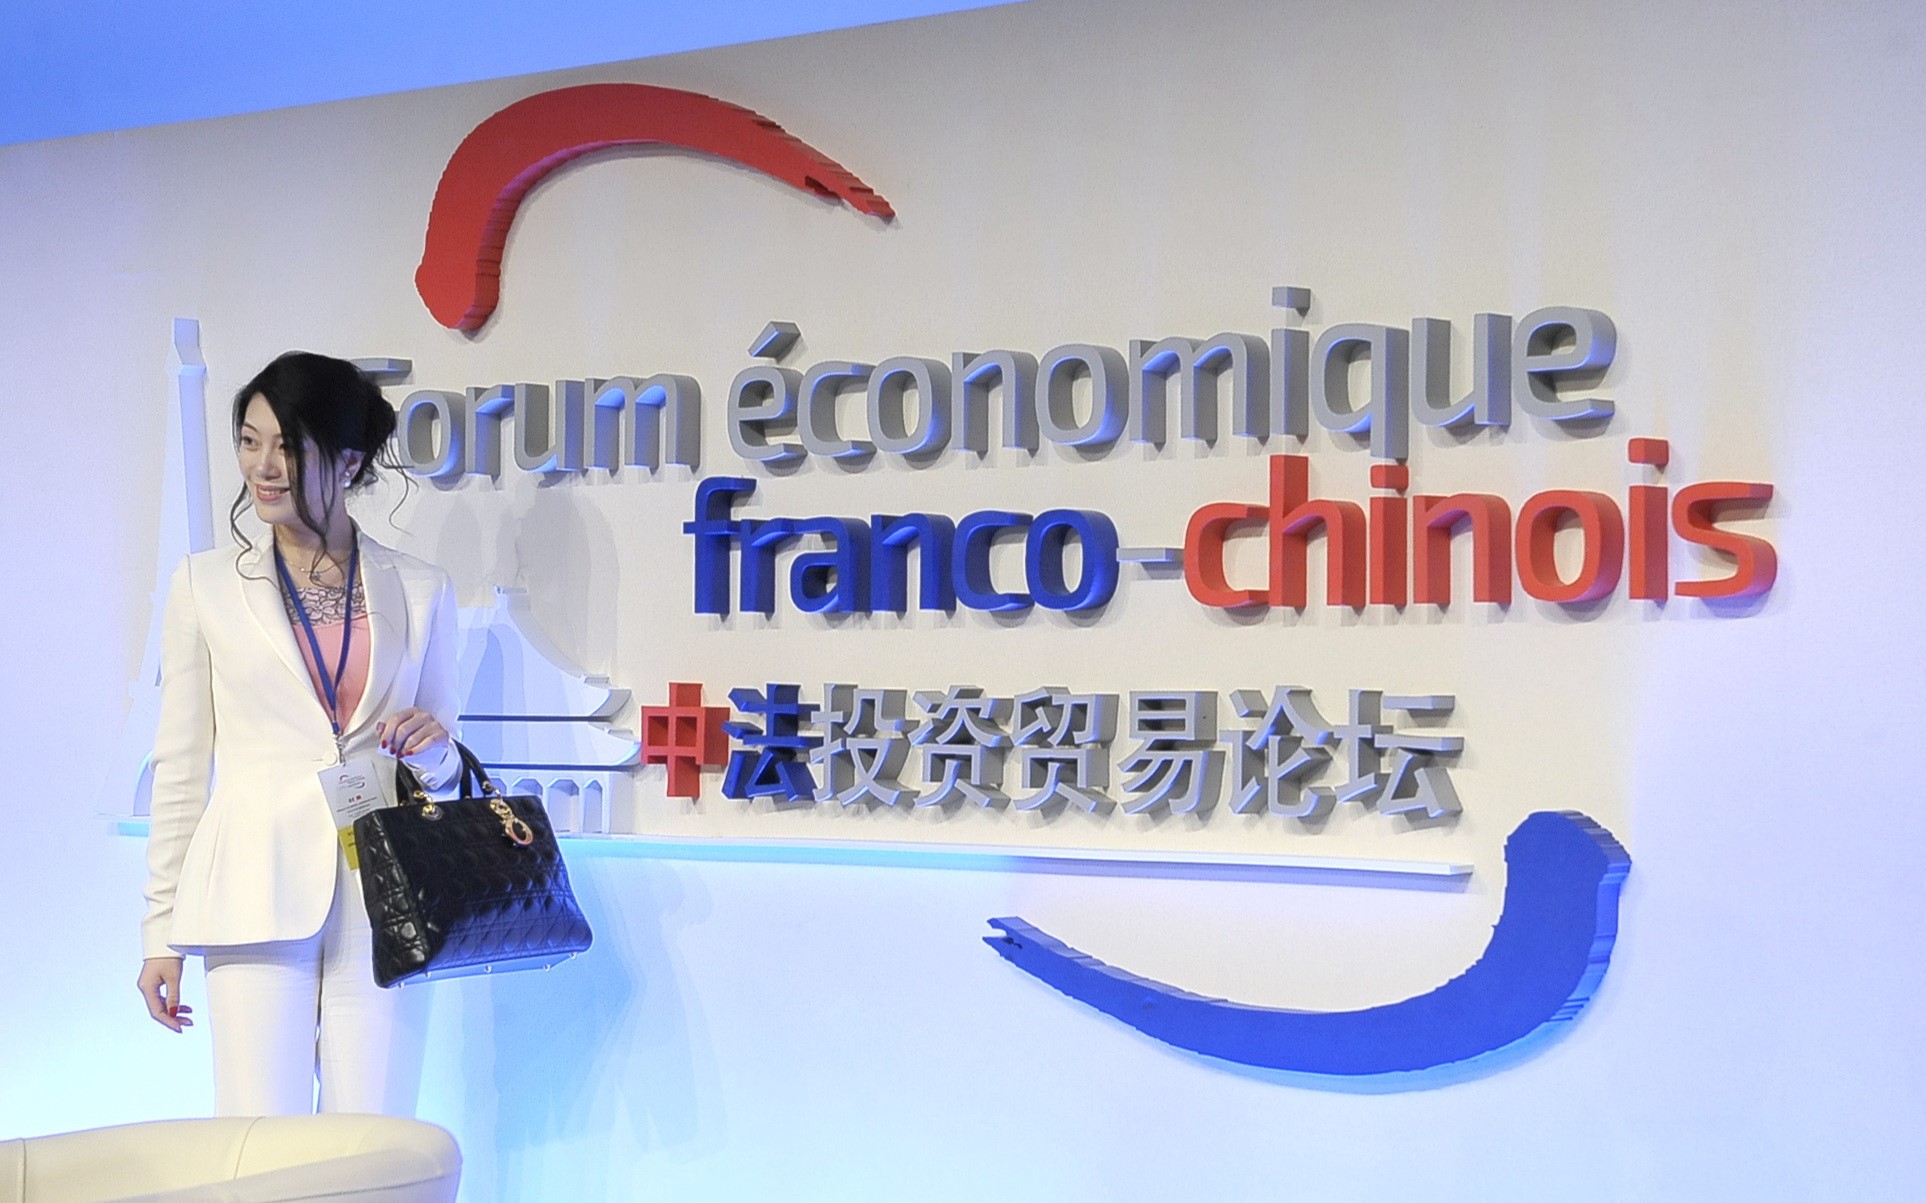 Forum économique franco-chinois 